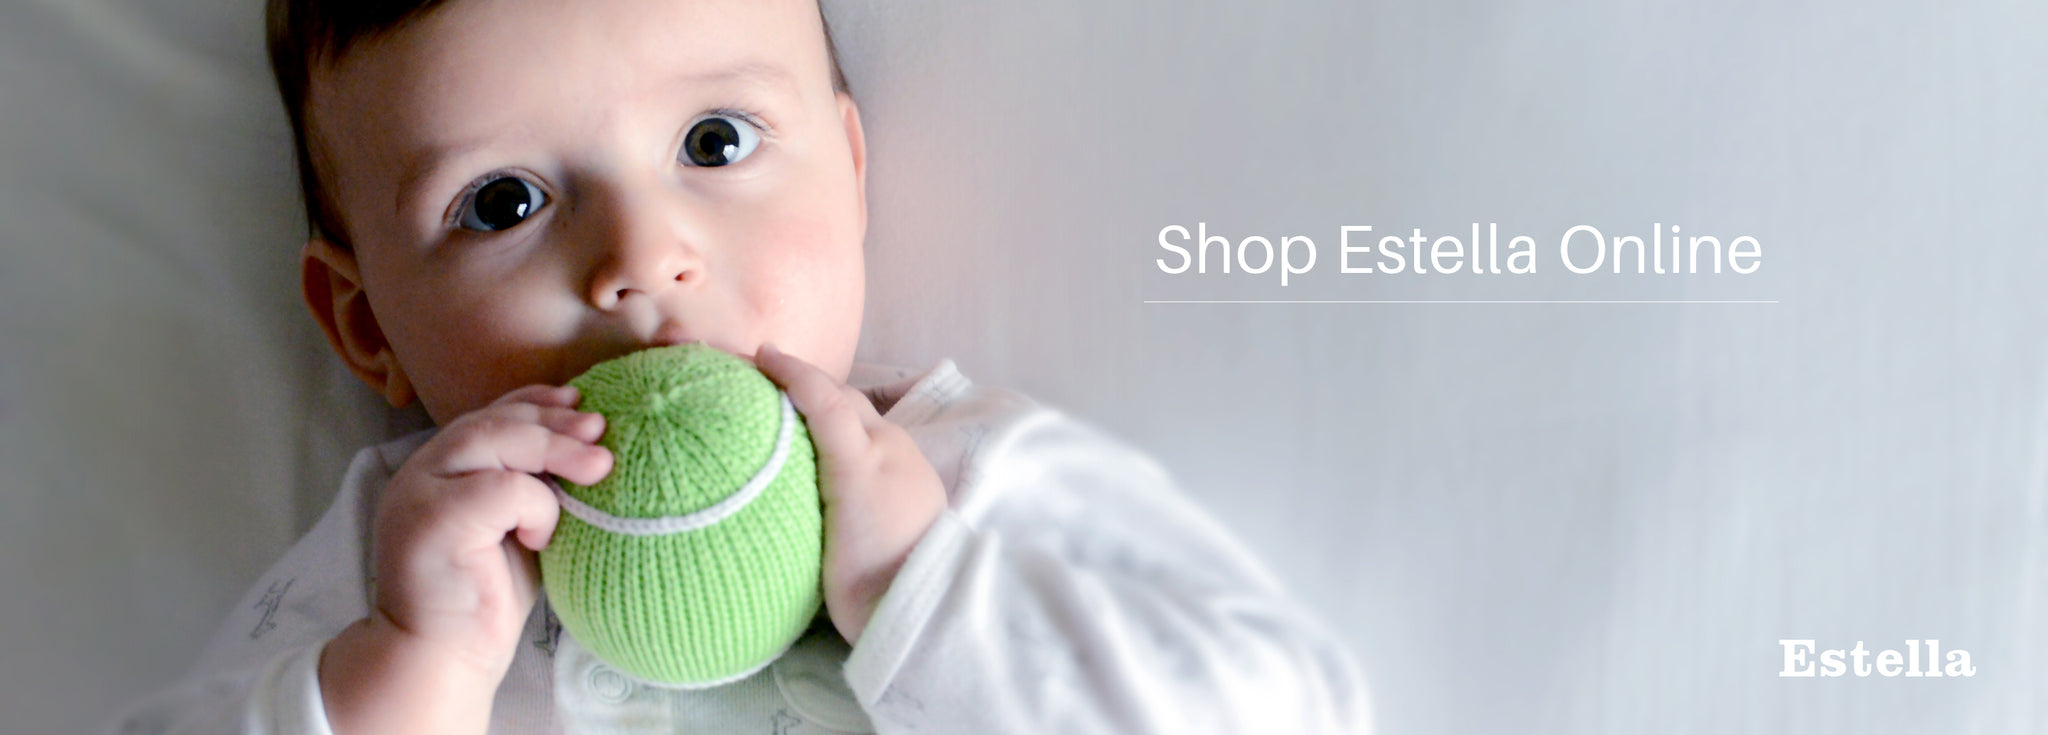 Shop Estella Online